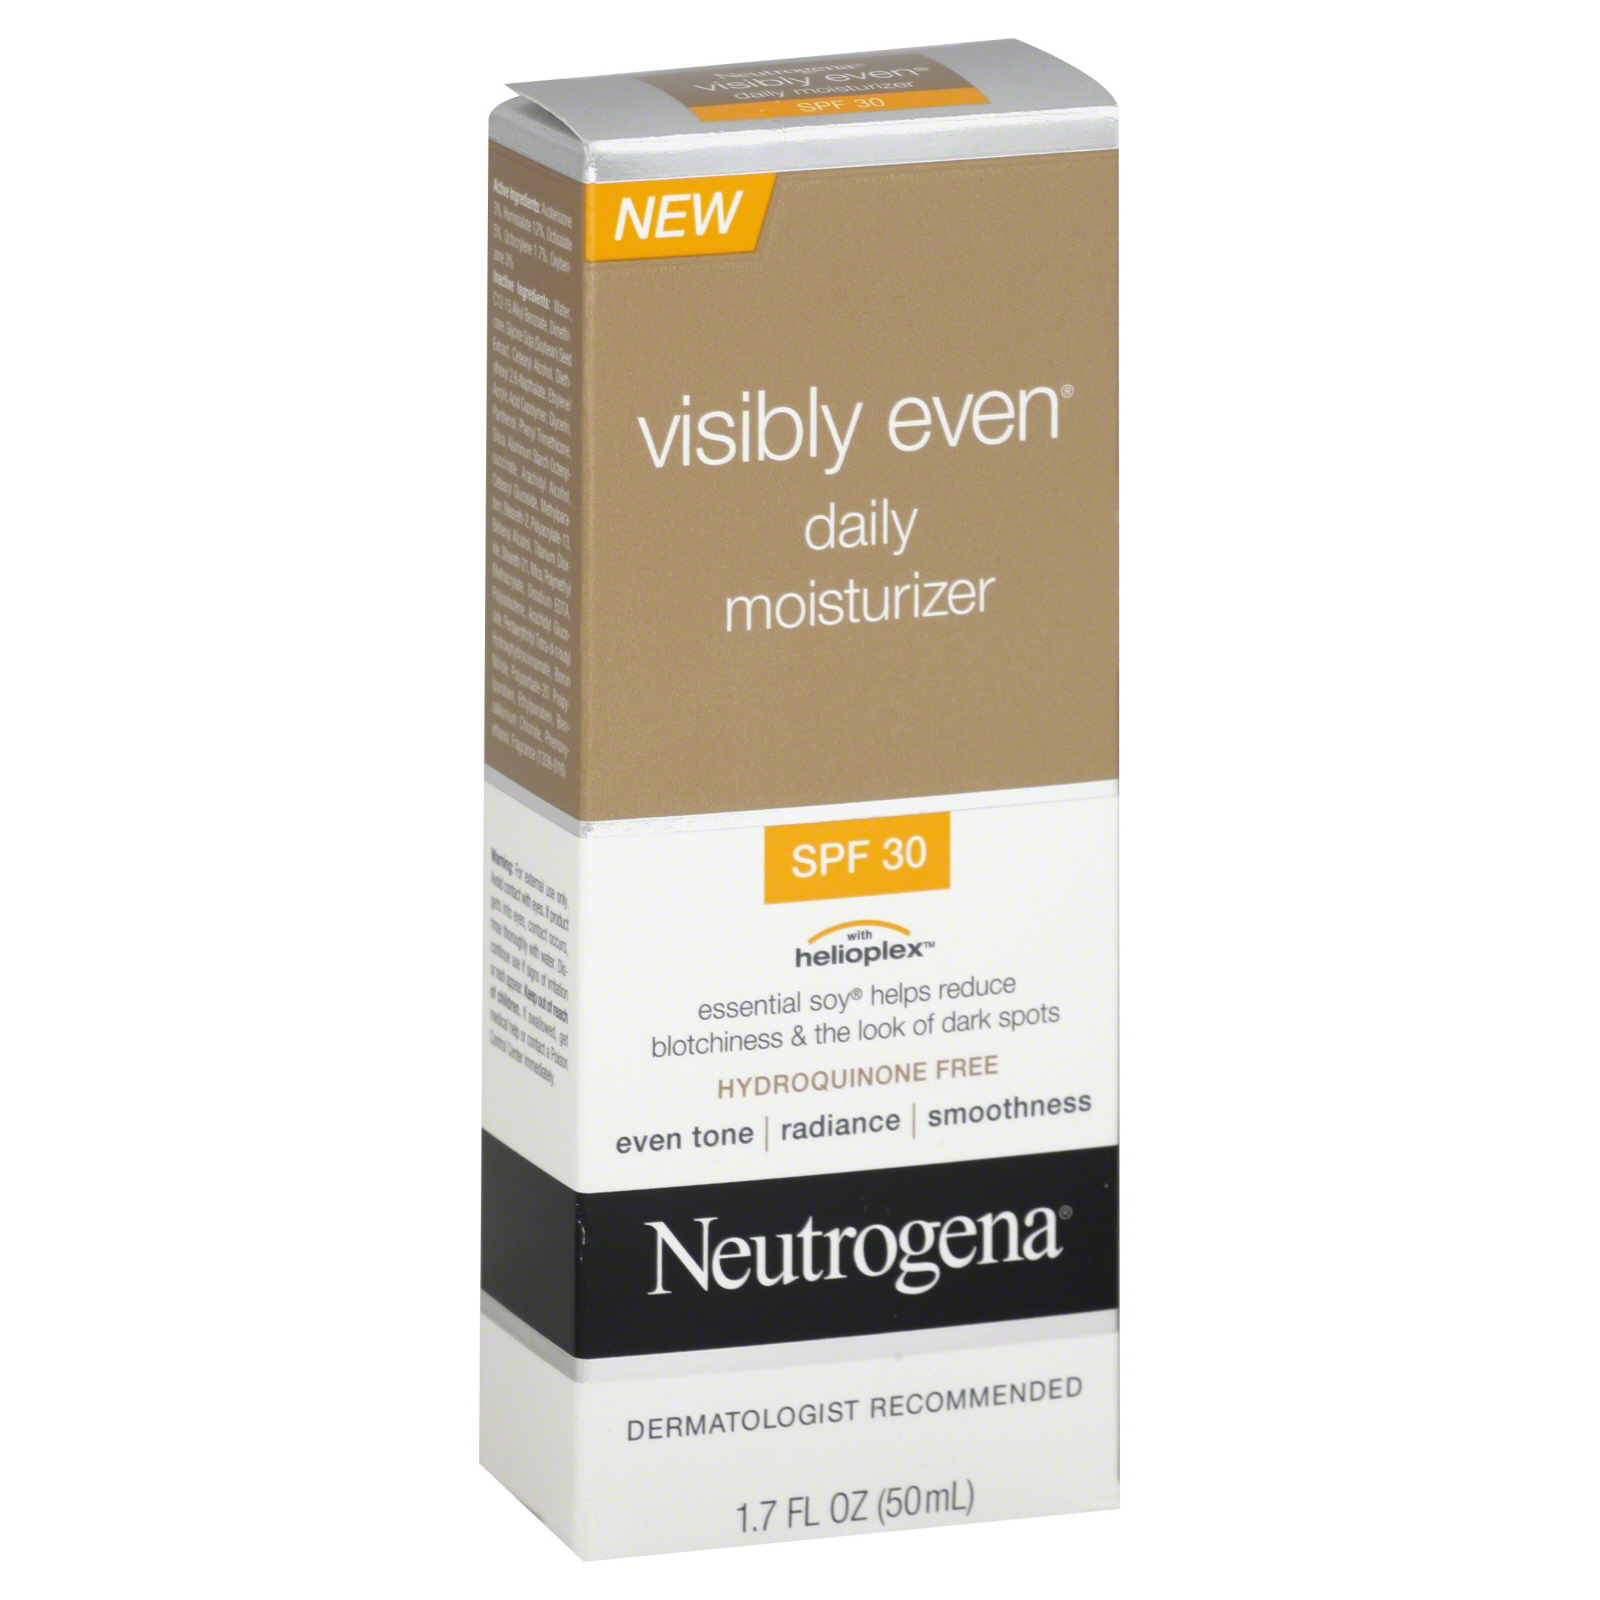 Neutrogena Visibly Even Daily Moisturizer, 1.7 fl oz (50 ml)